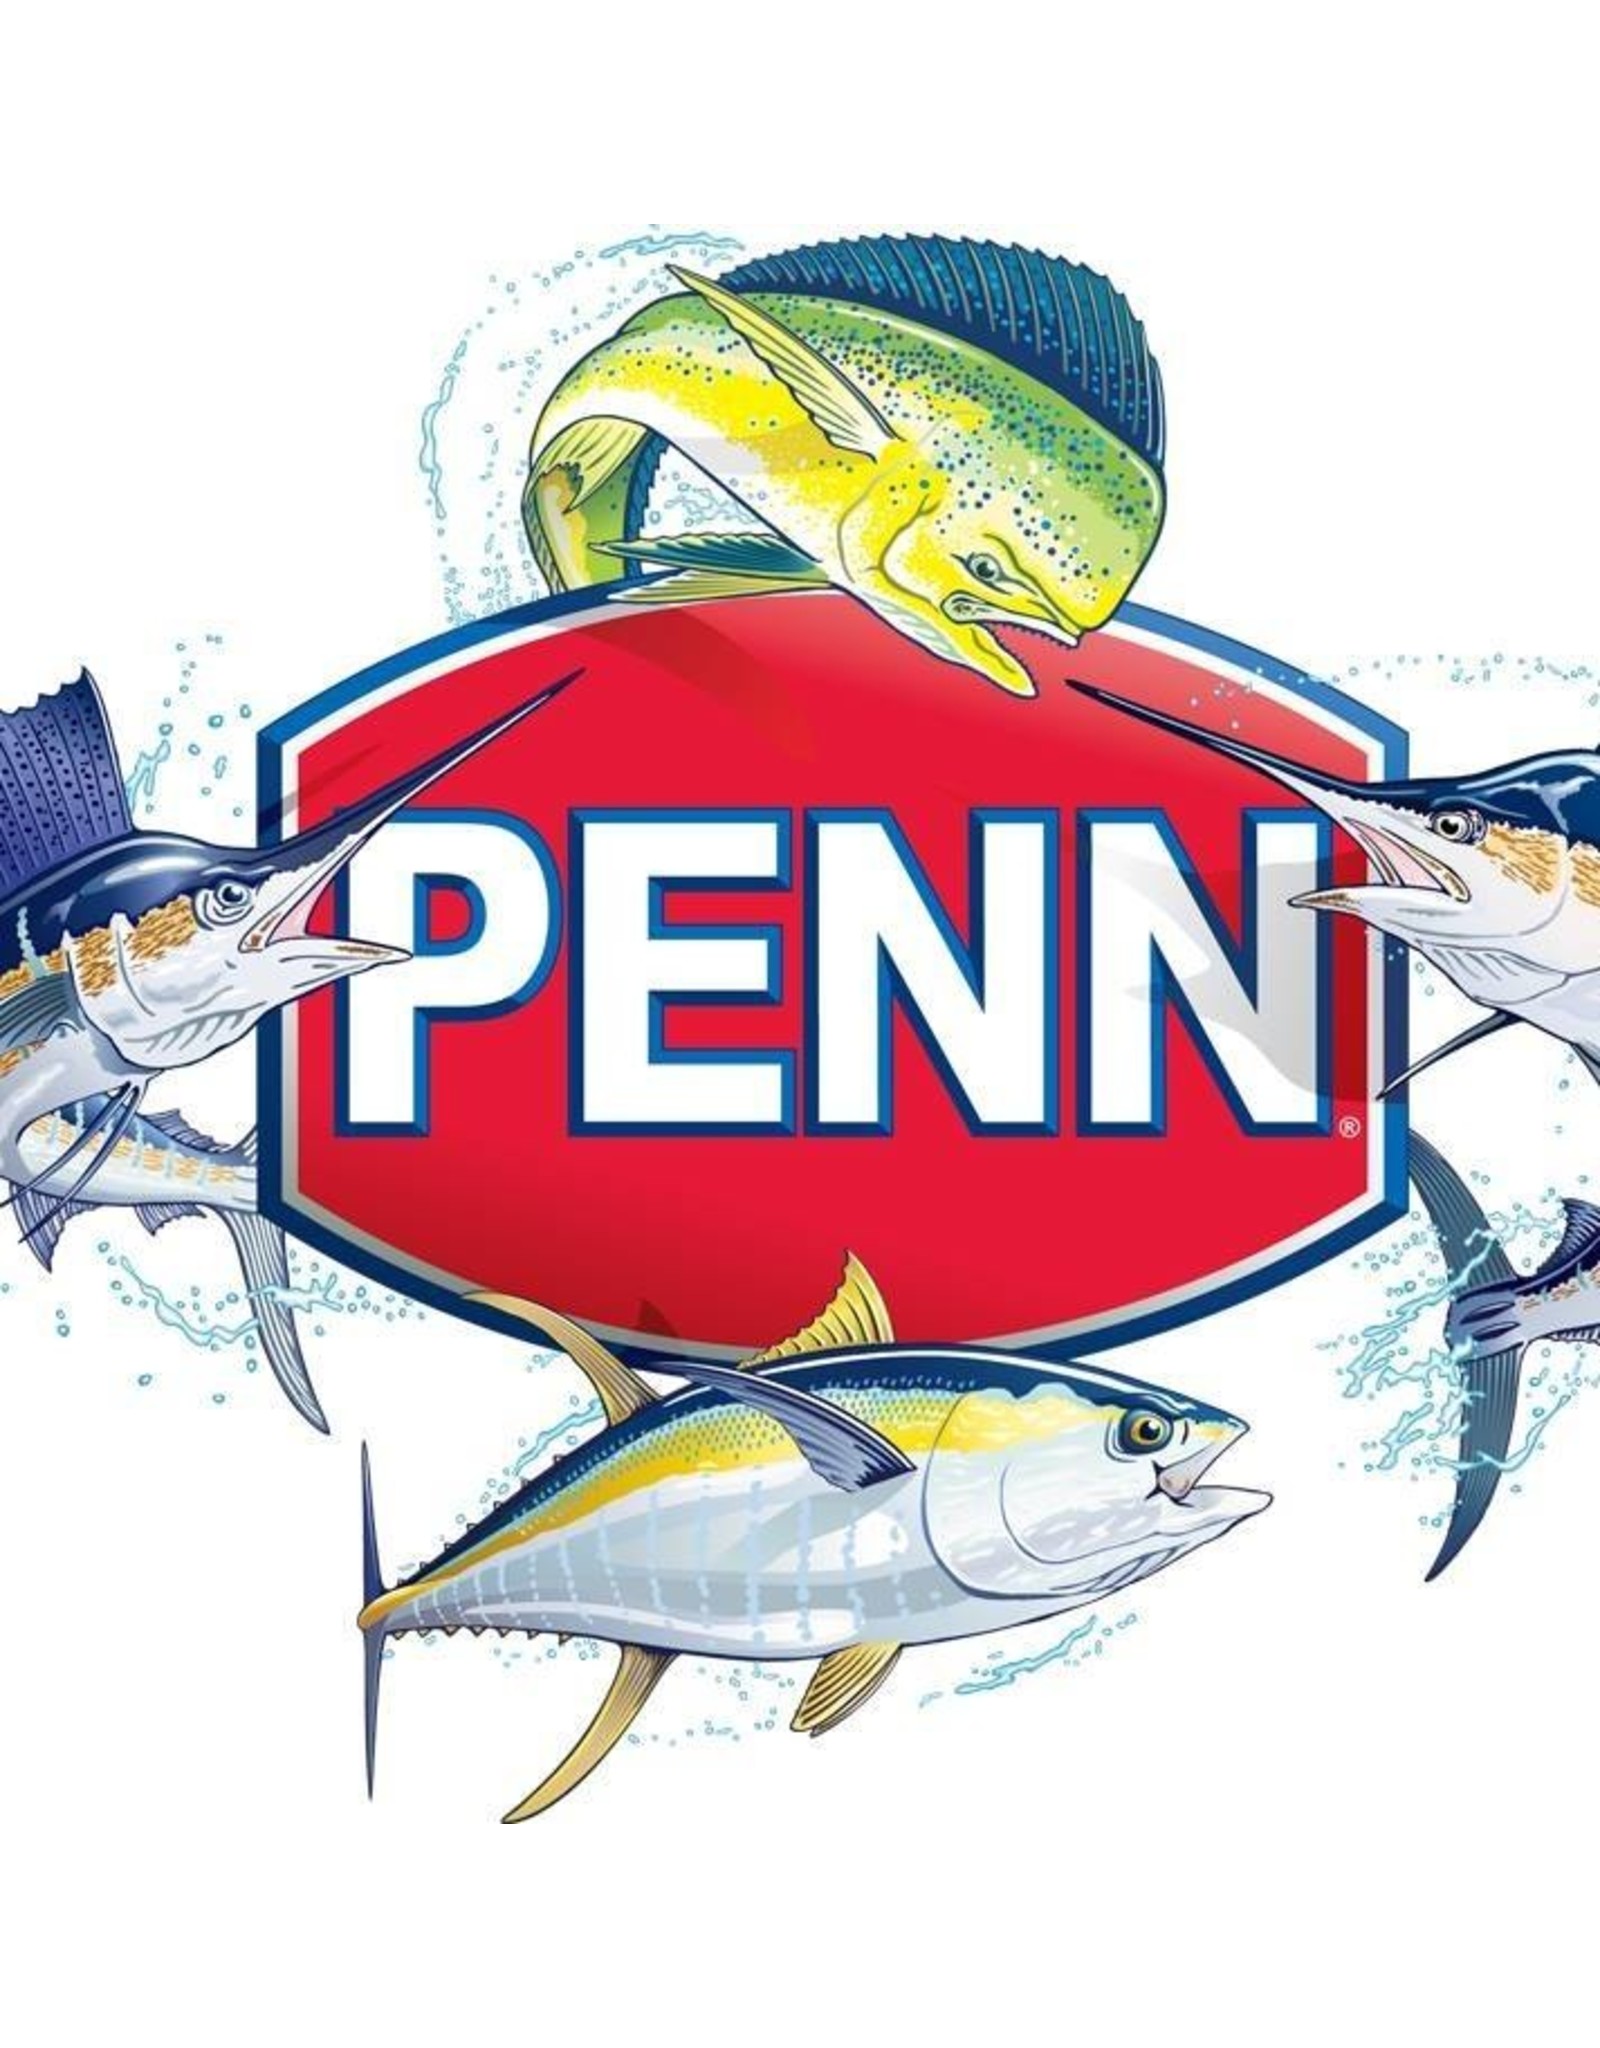 Penn 32-101  BAIL SPRING/NLA